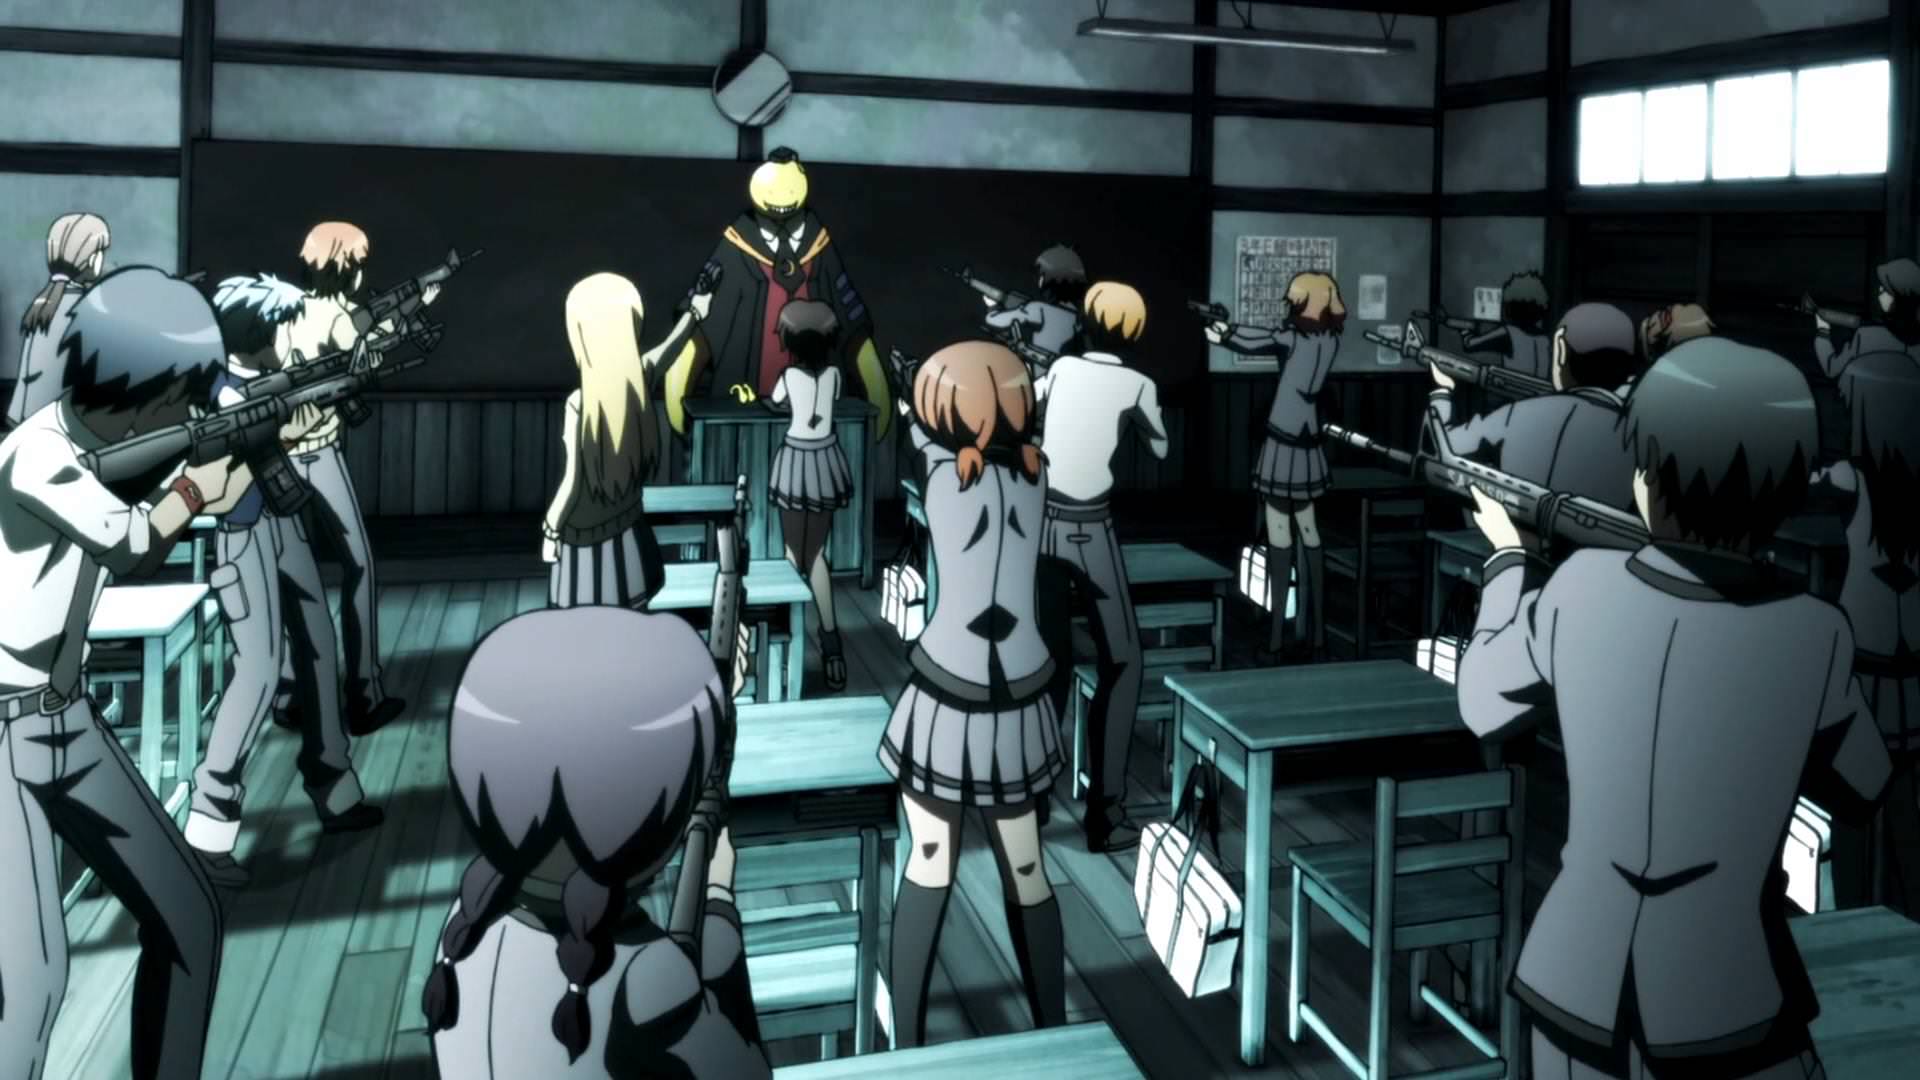 Anime Assassination Classroom HD Wallpaper